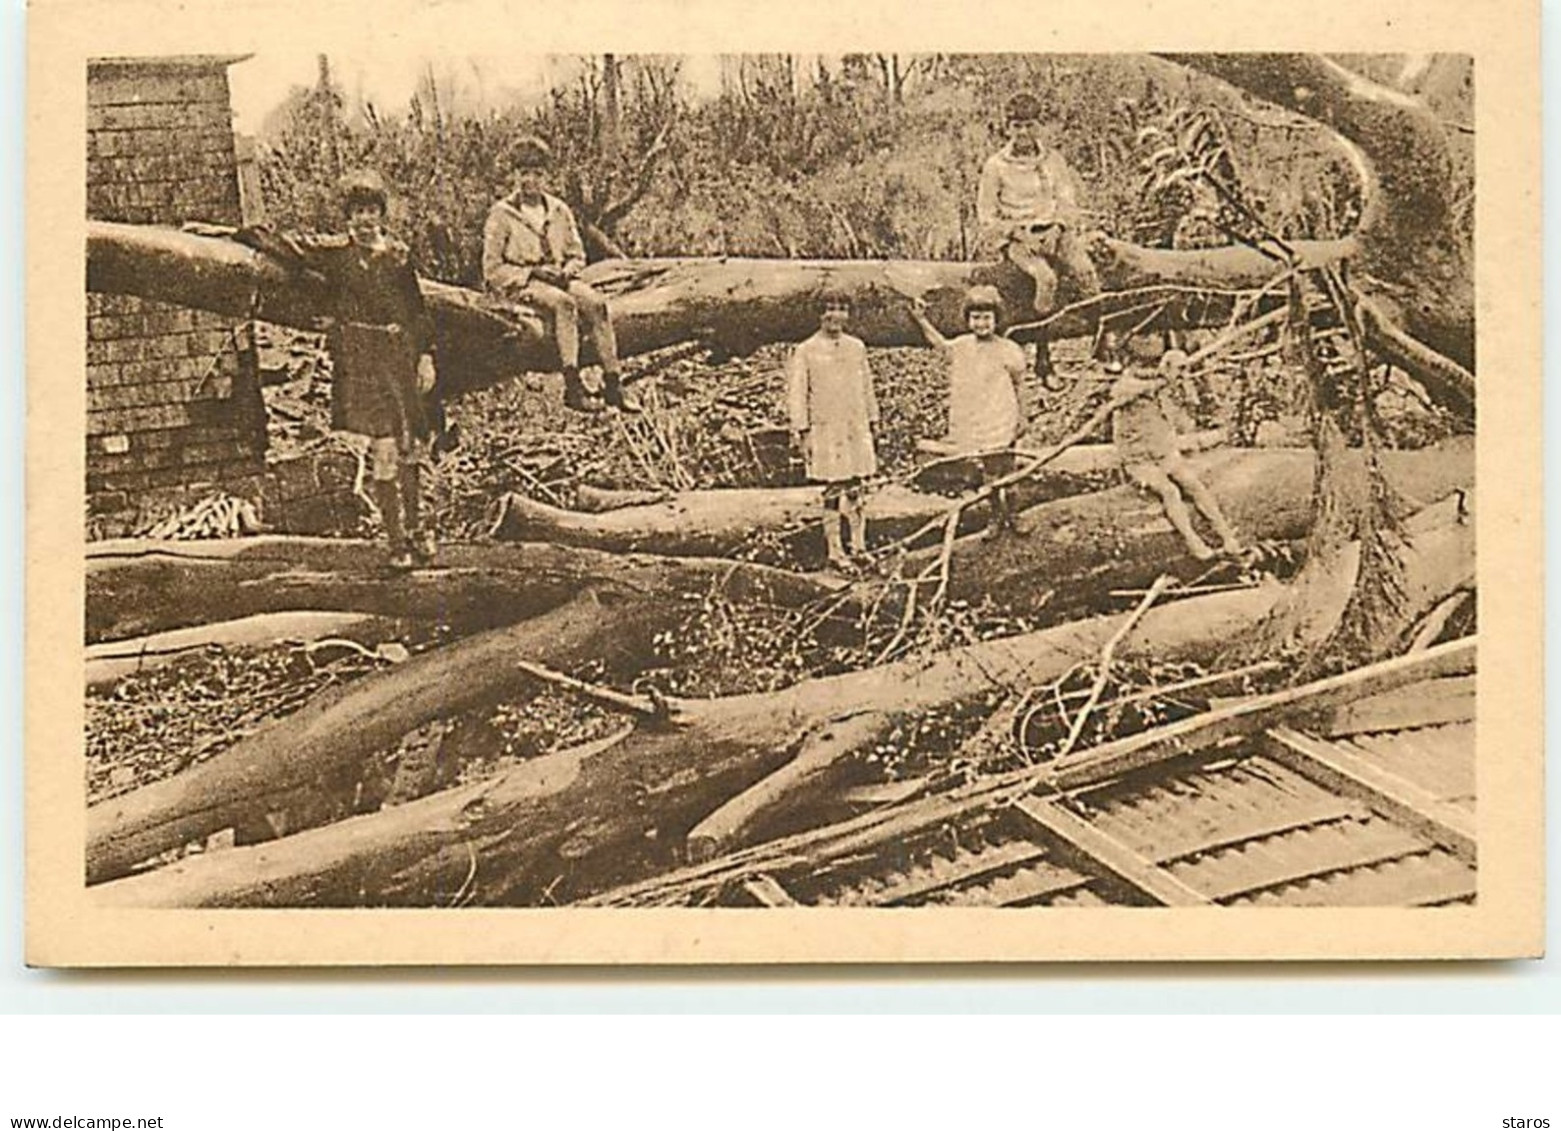 ILE MAURICE - Après Le Cyclone De Mars 1931 - Mauritius